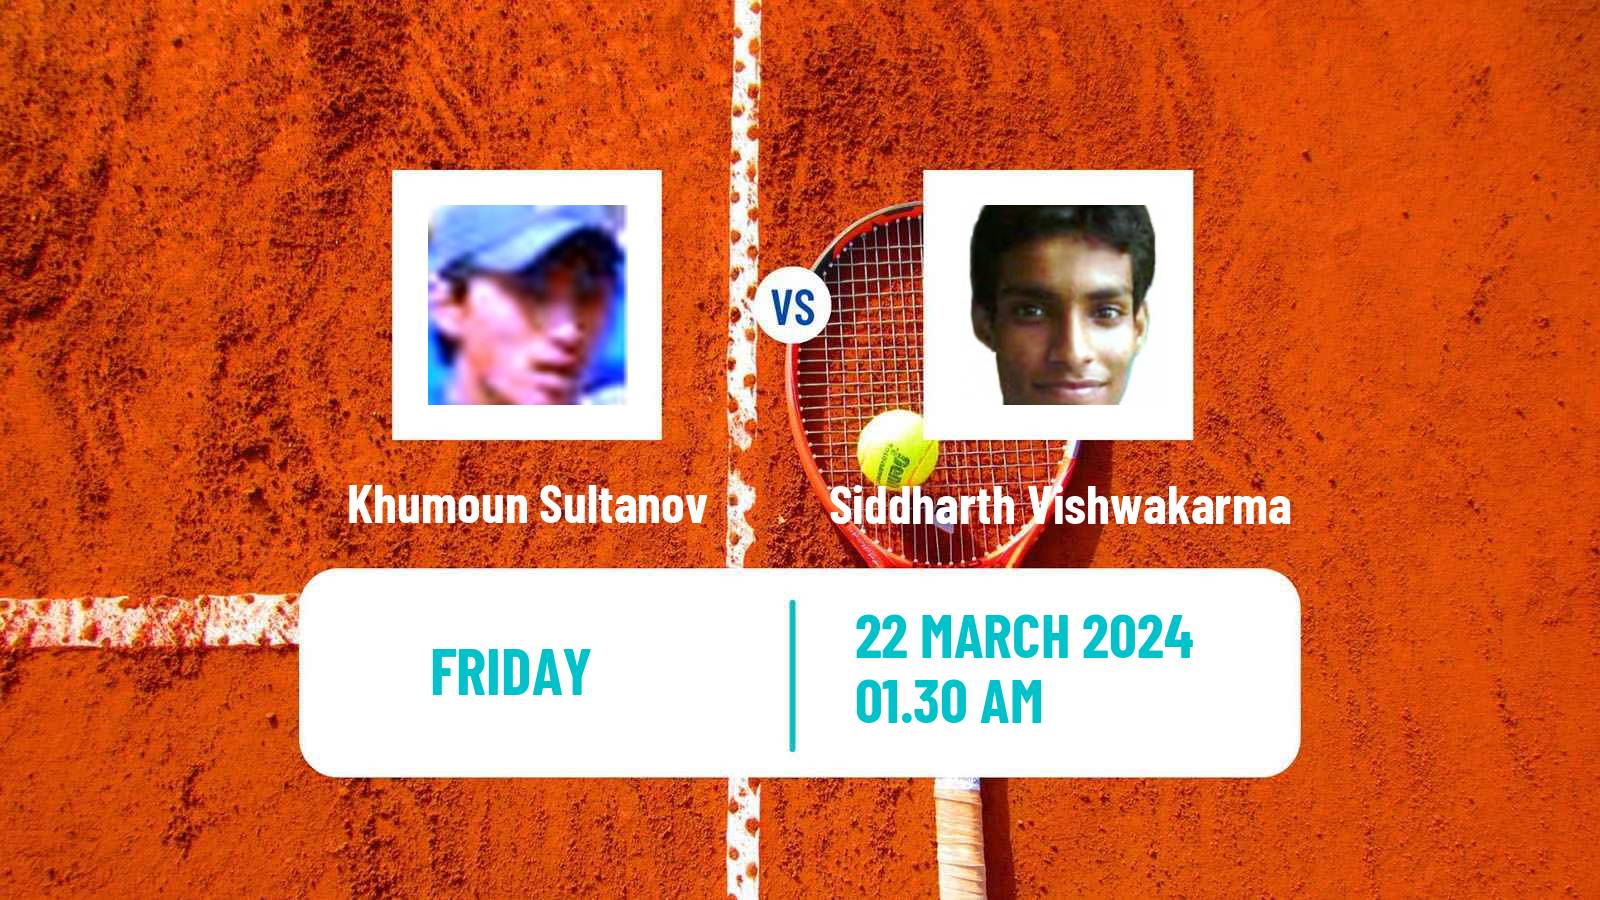 Tennis ITF M15 Chandigarh Men Khumoun Sultanov - Siddharth Vishwakarma